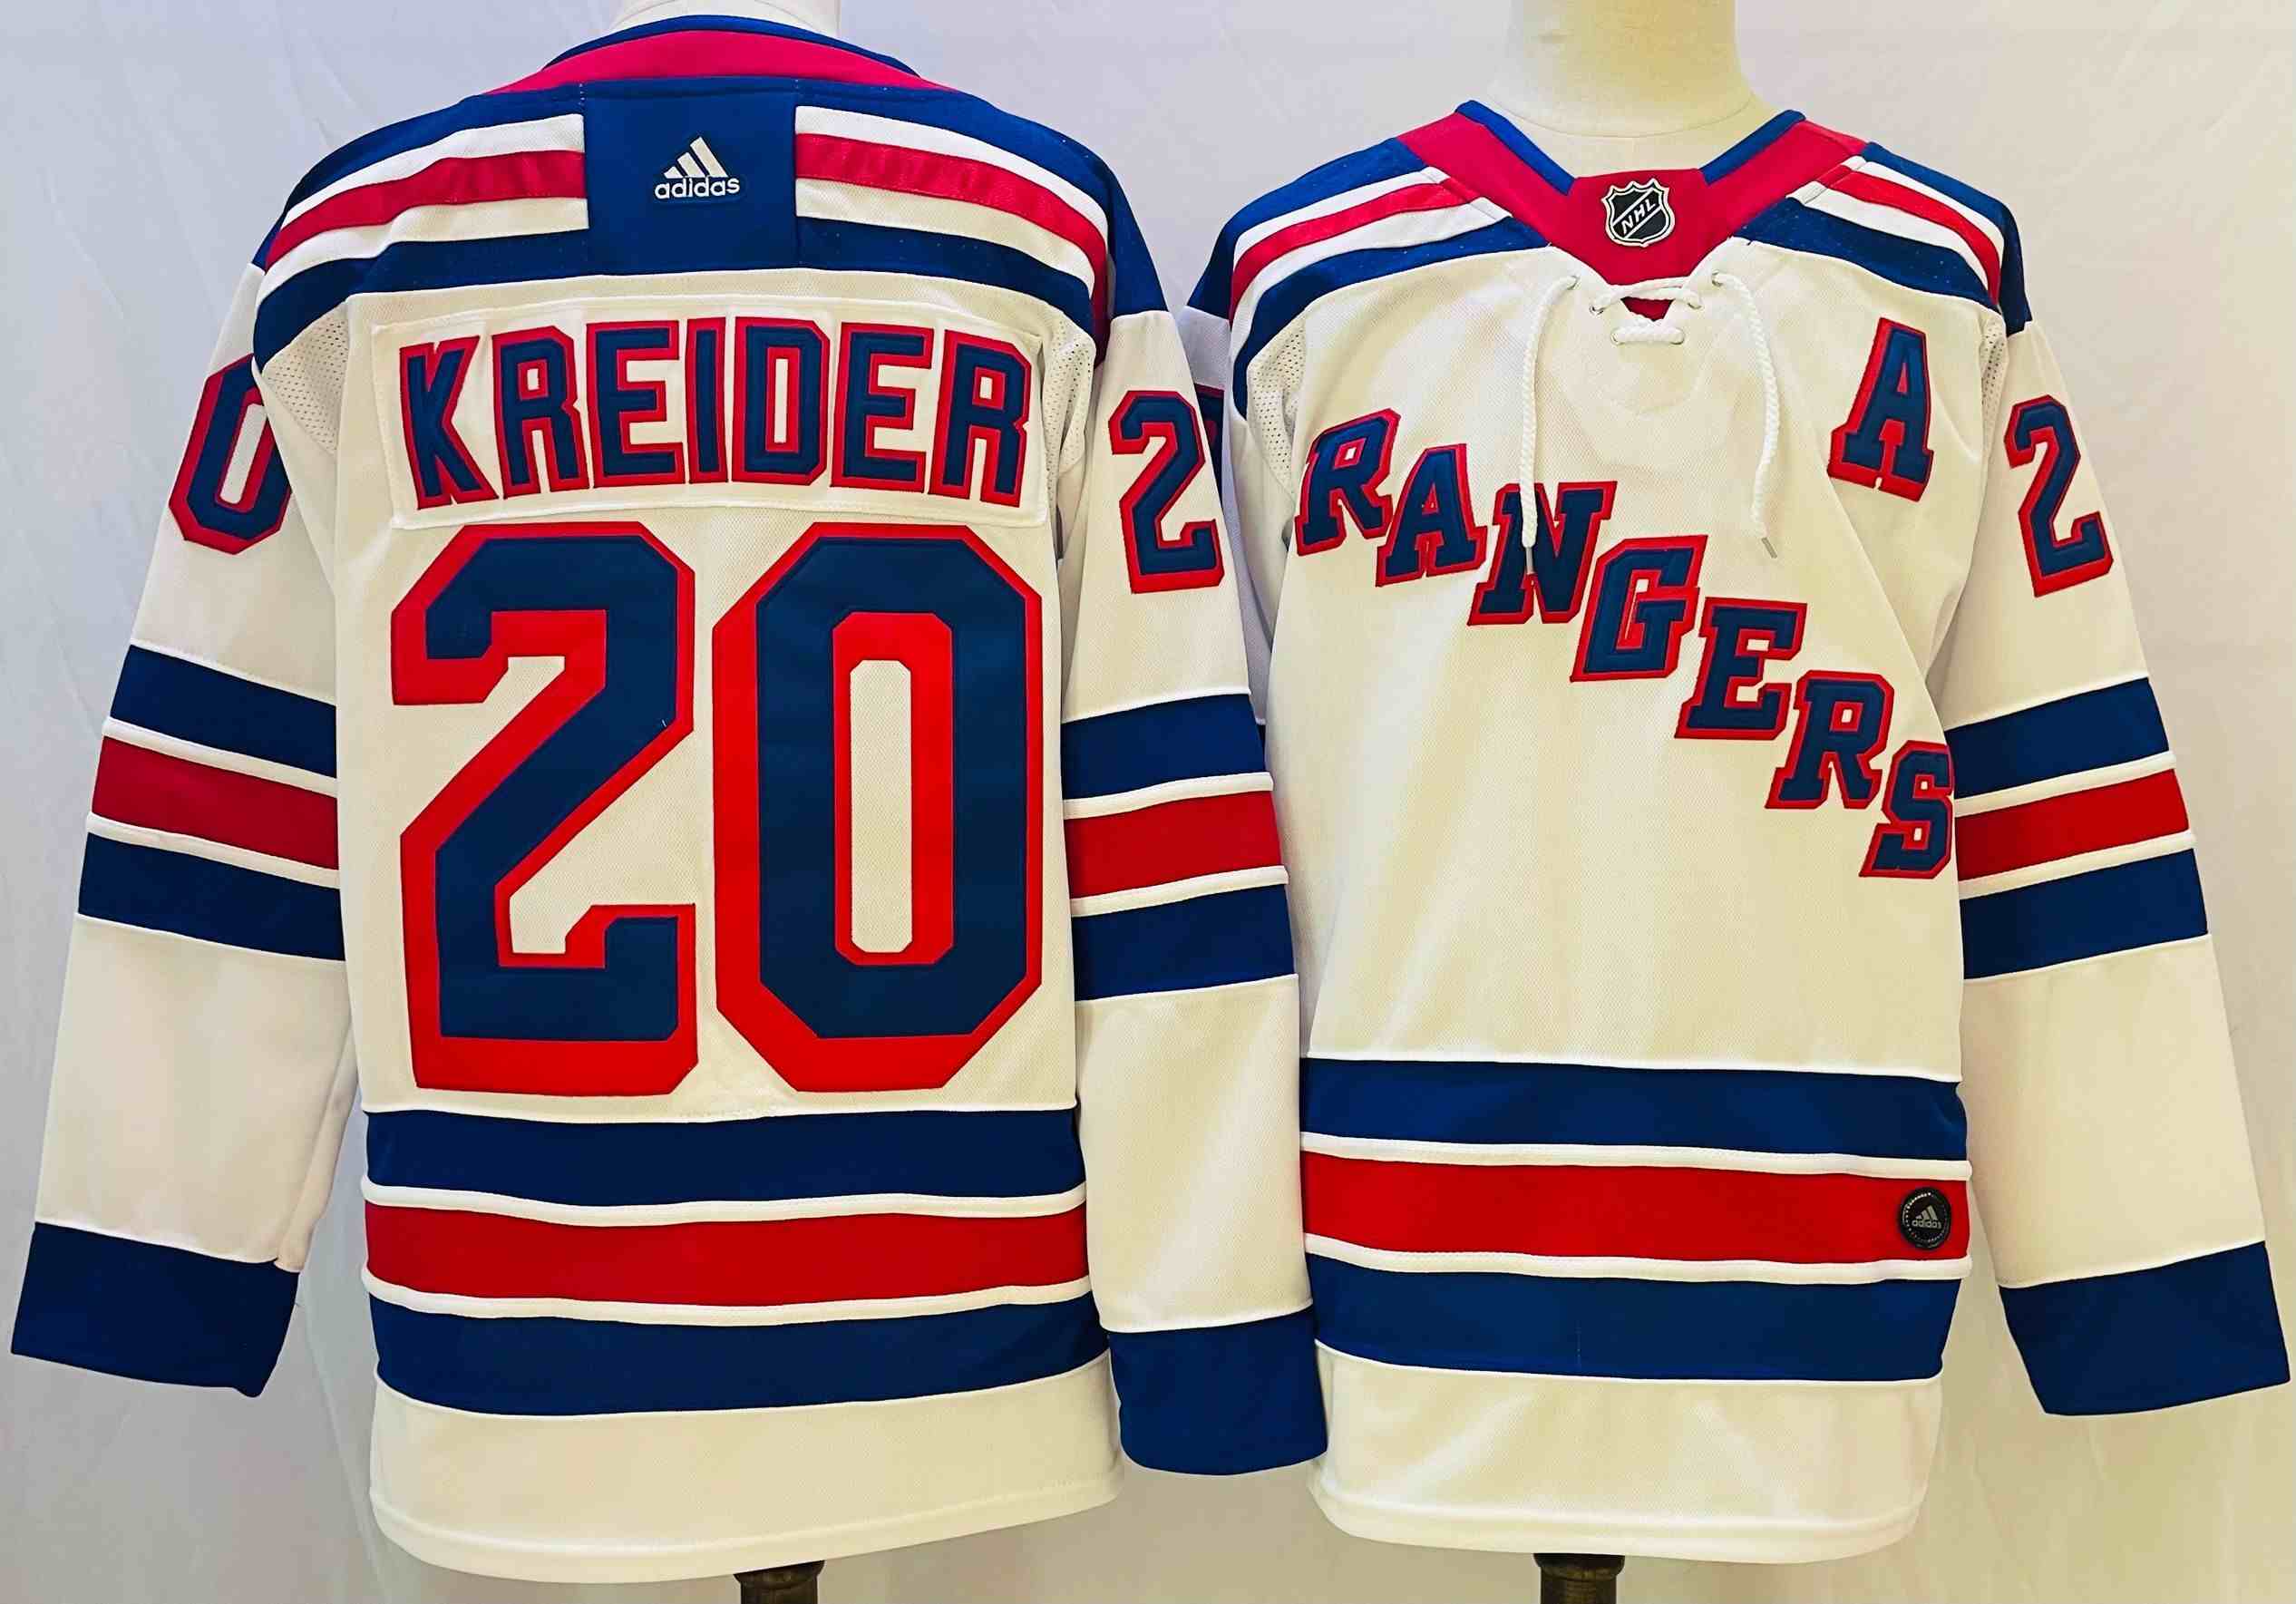 Men's New York Rangers #20 Chris Kreider White Stitched Jersey